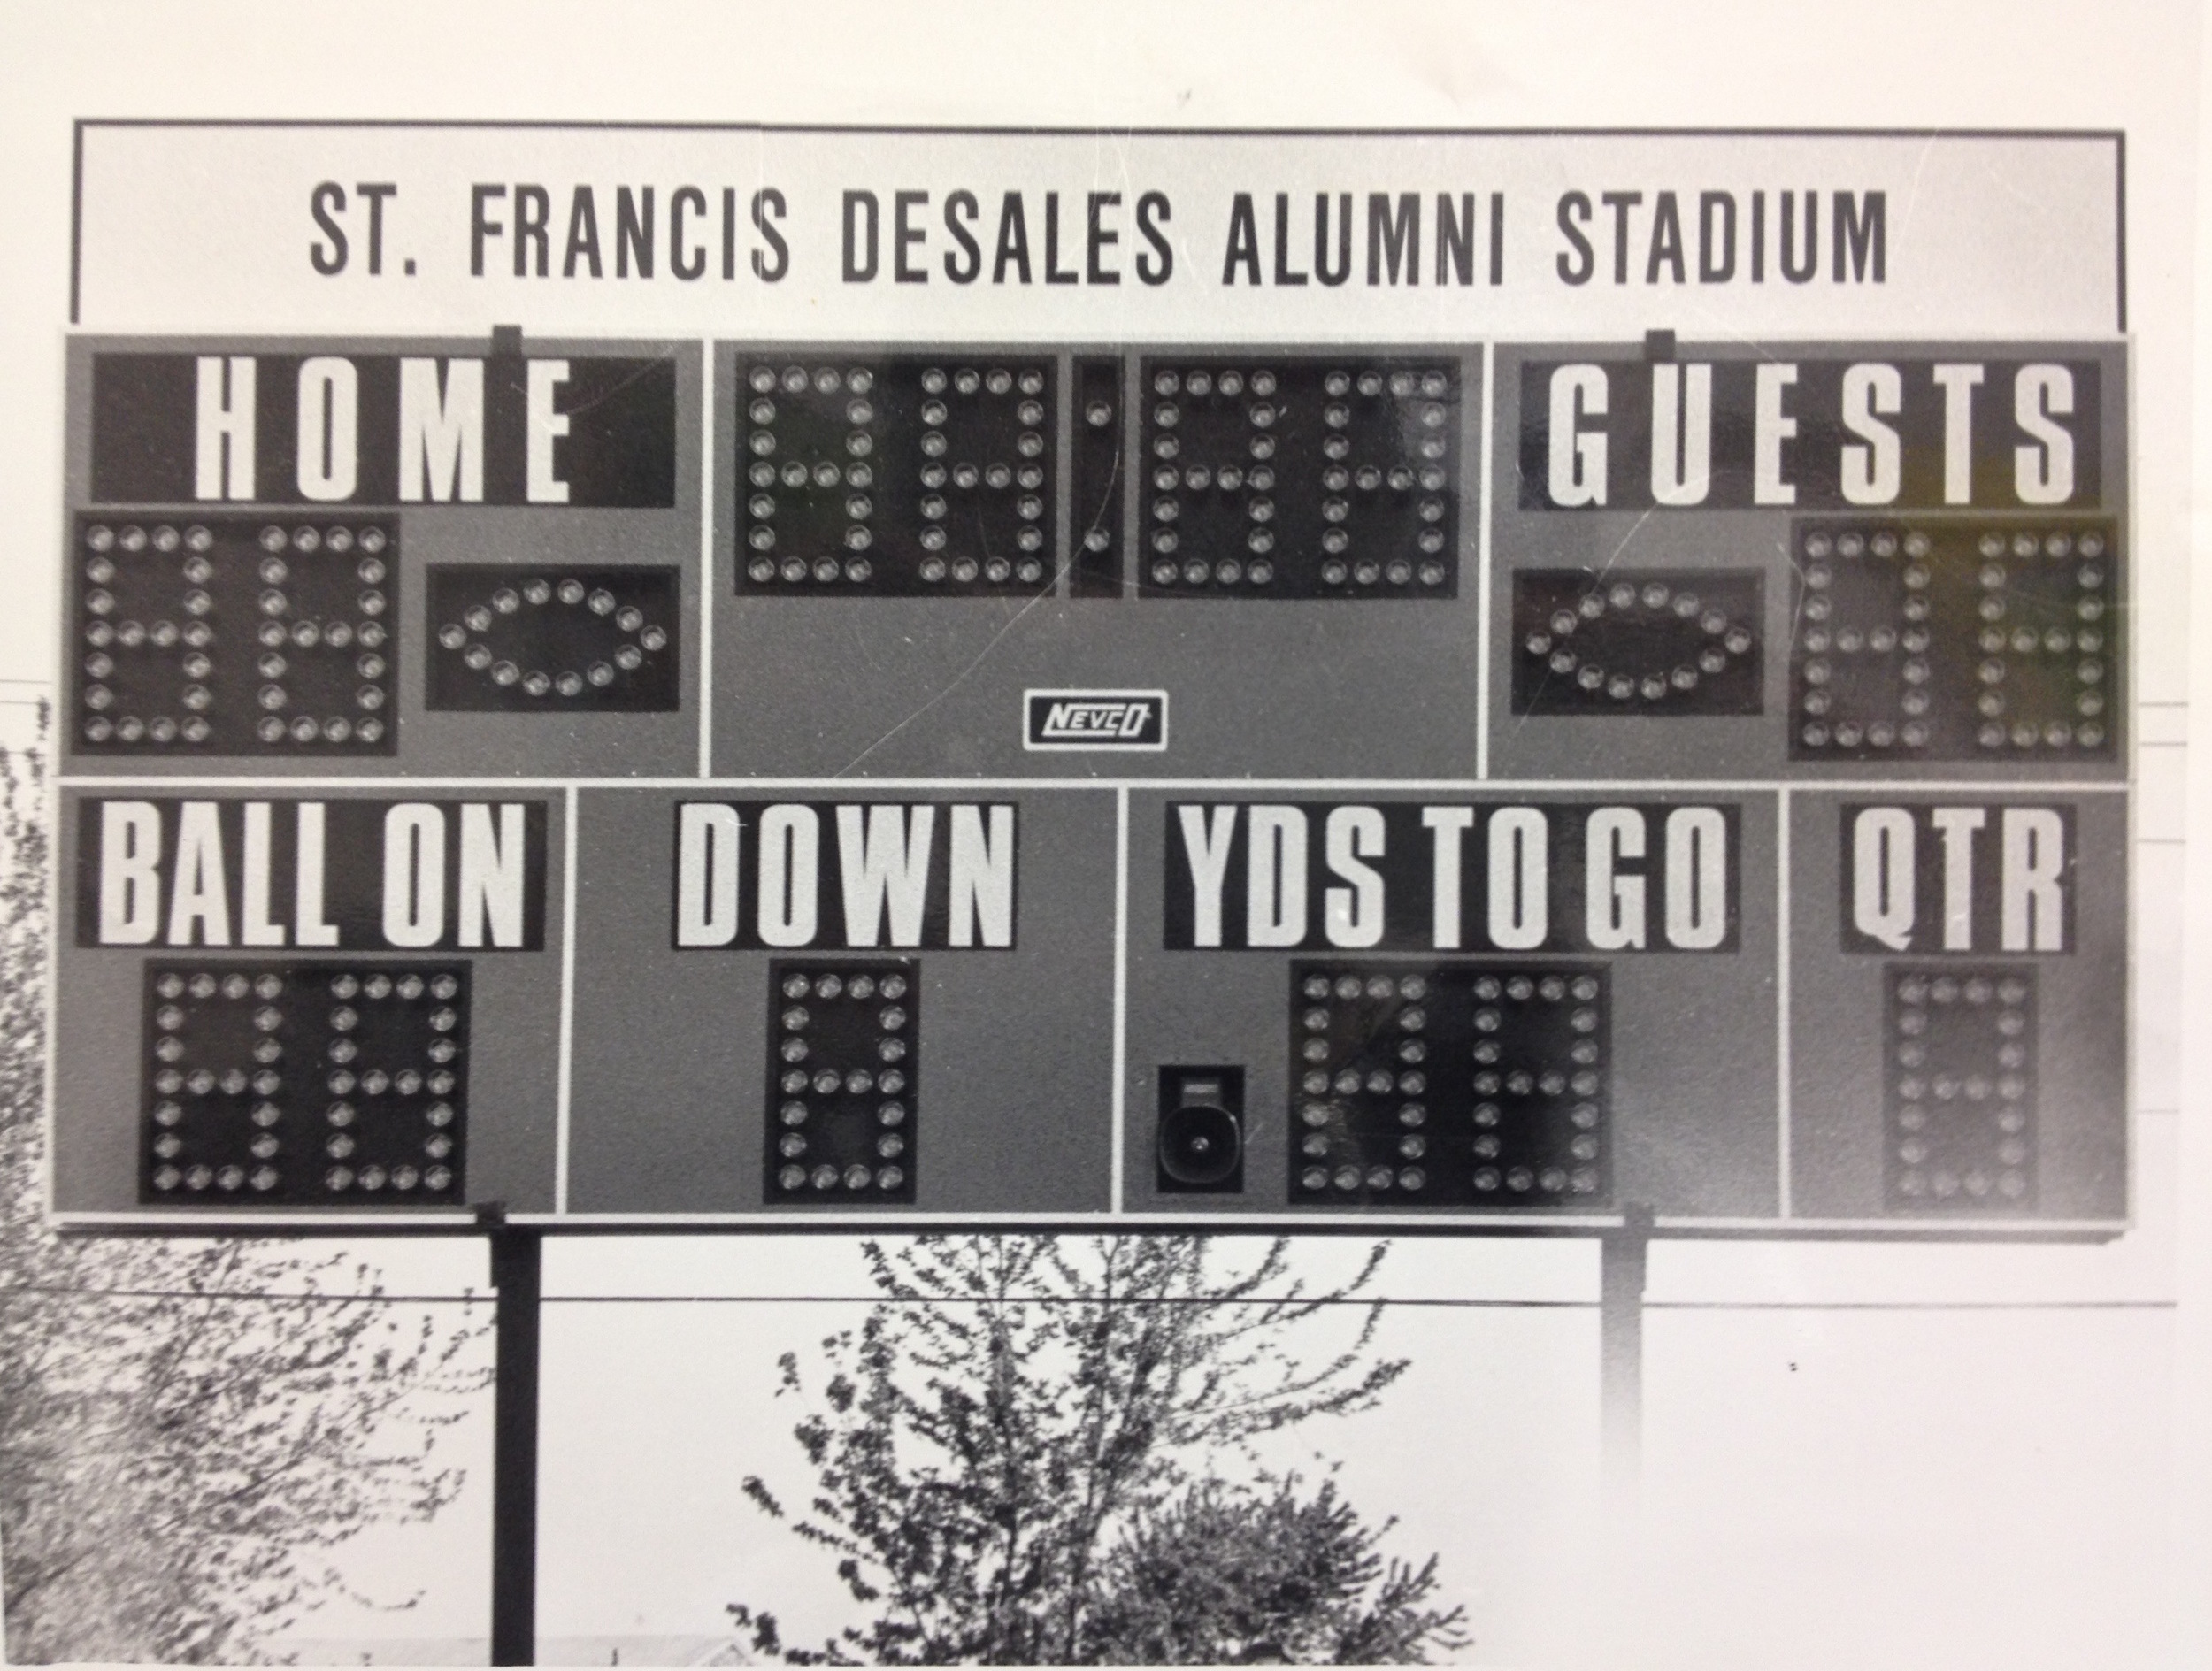 The original scoreboard inside of Alumni Stadium